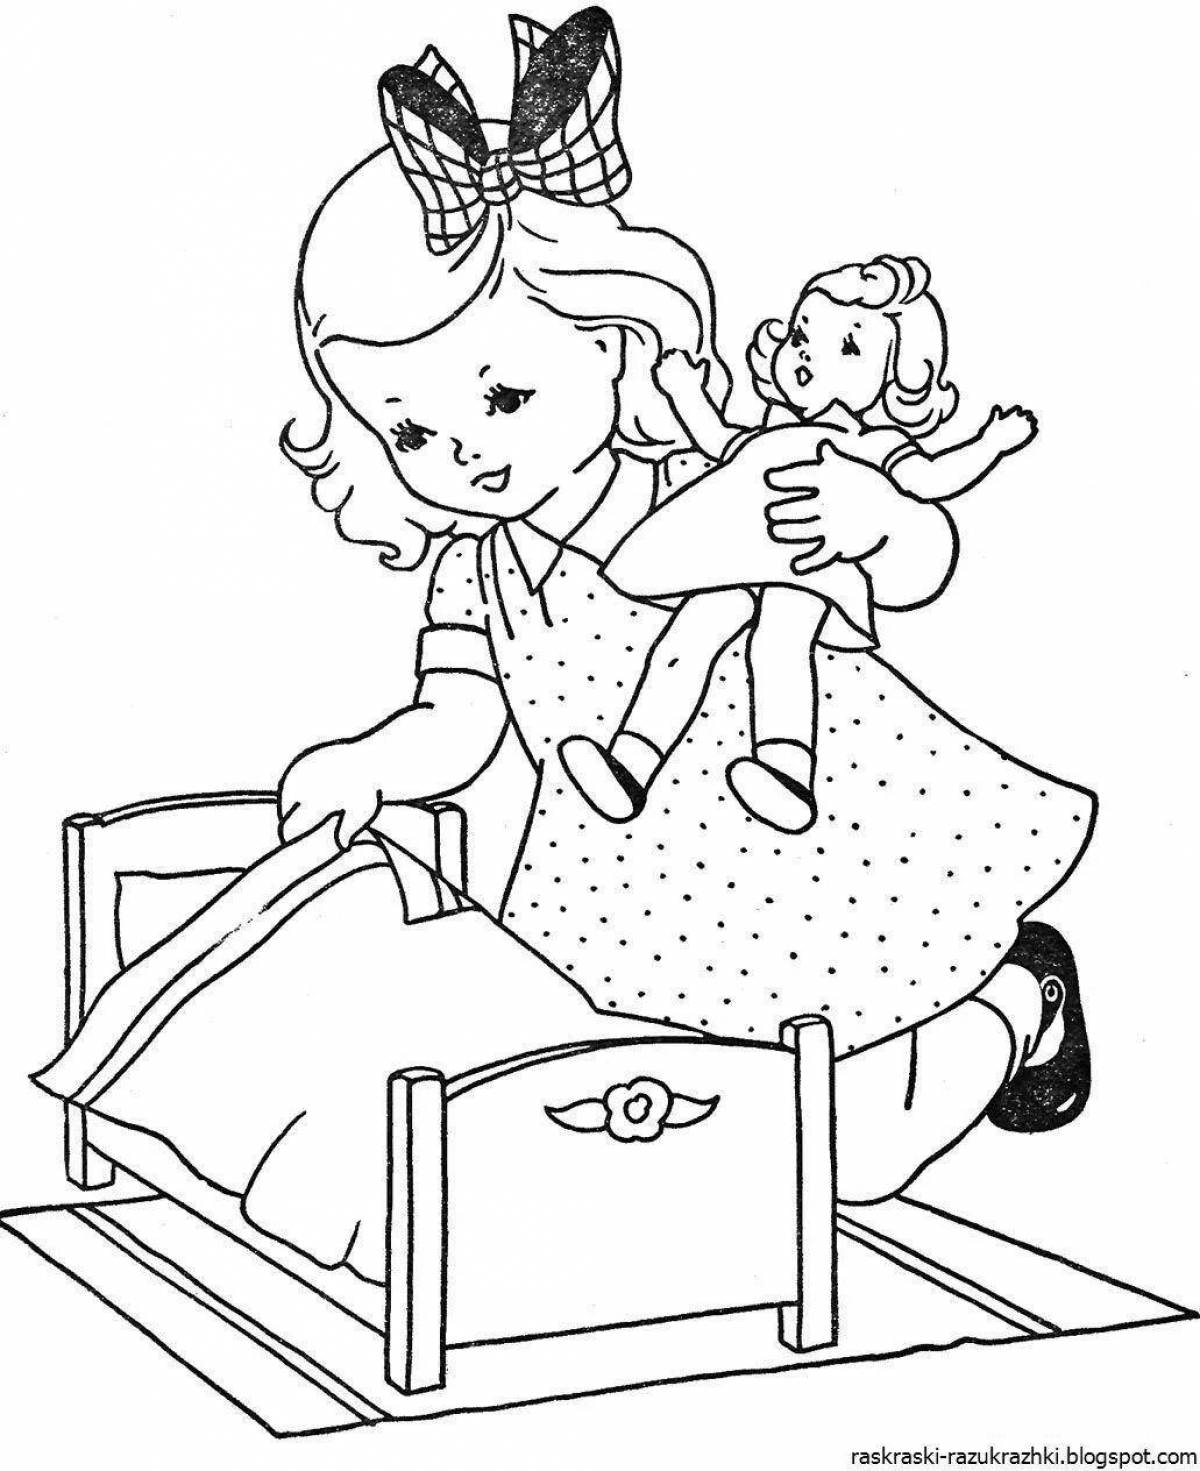 Яркая кукла-раскраска для детей